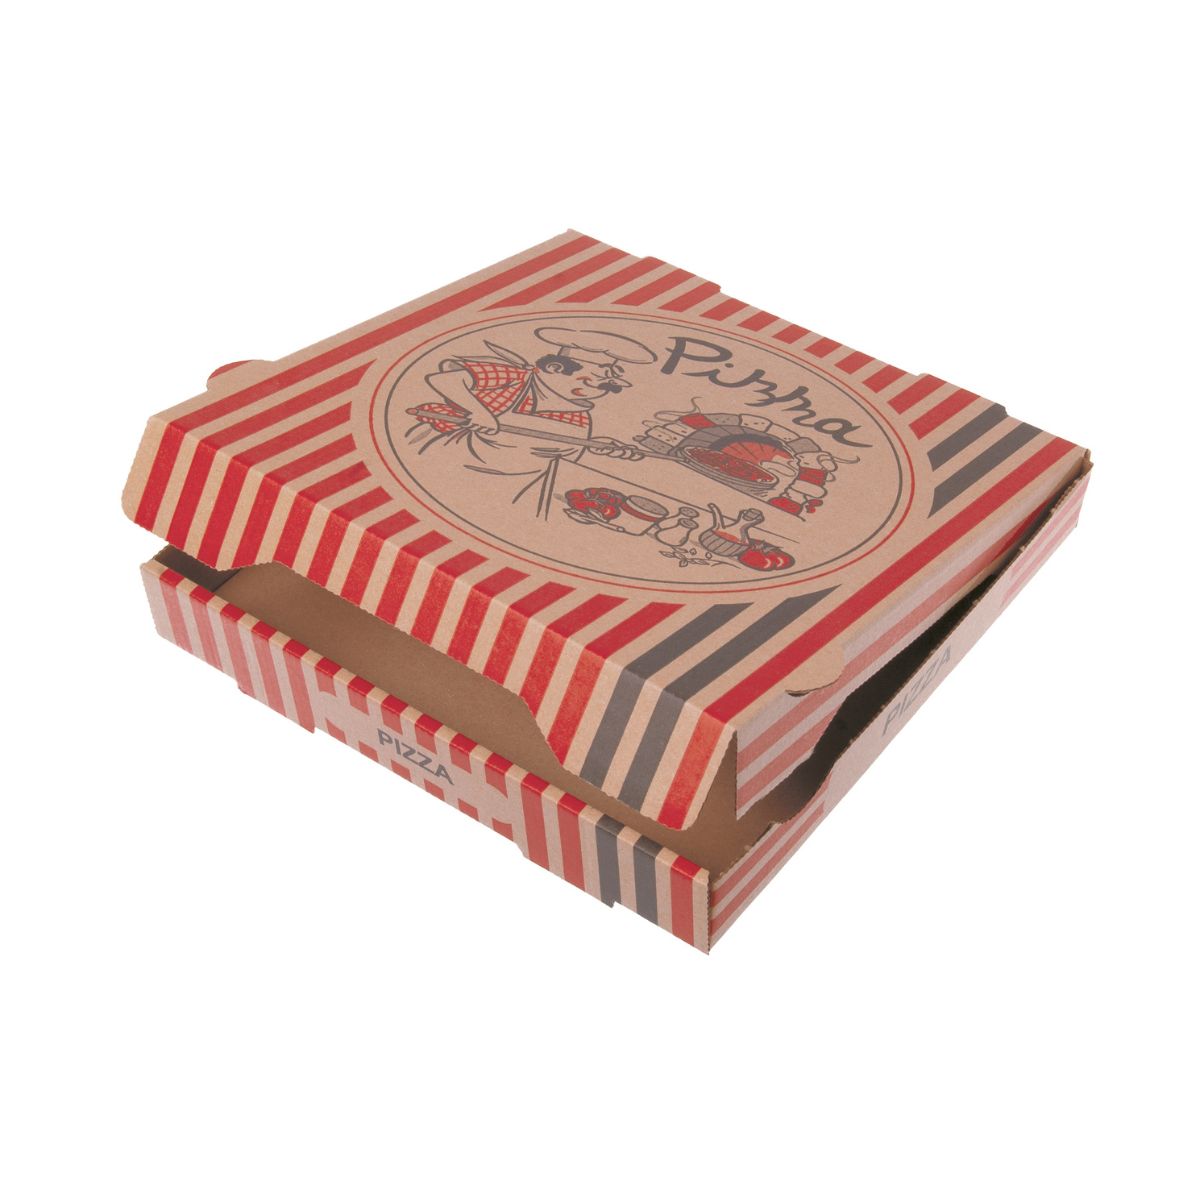 Pizzabox 28x28x4cm | Kraft rot-braun